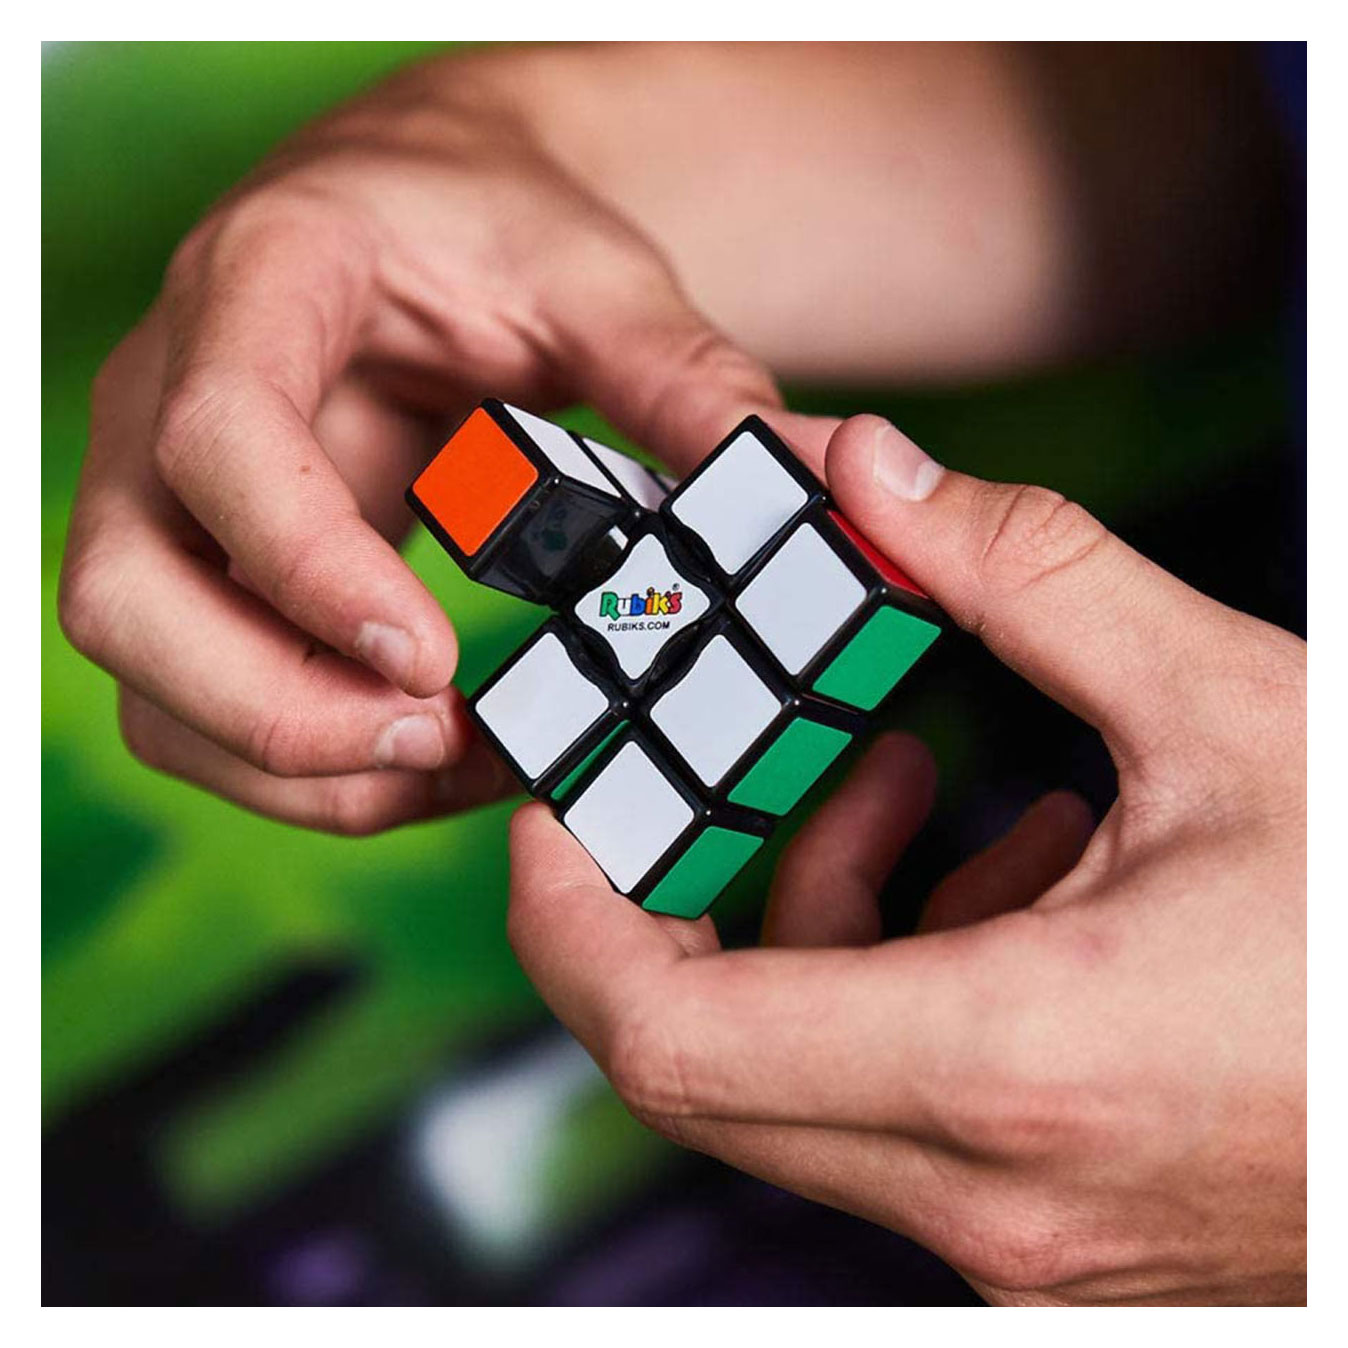 Rubik's Starter Pack (3x3, Edge) Breinpuzzel 